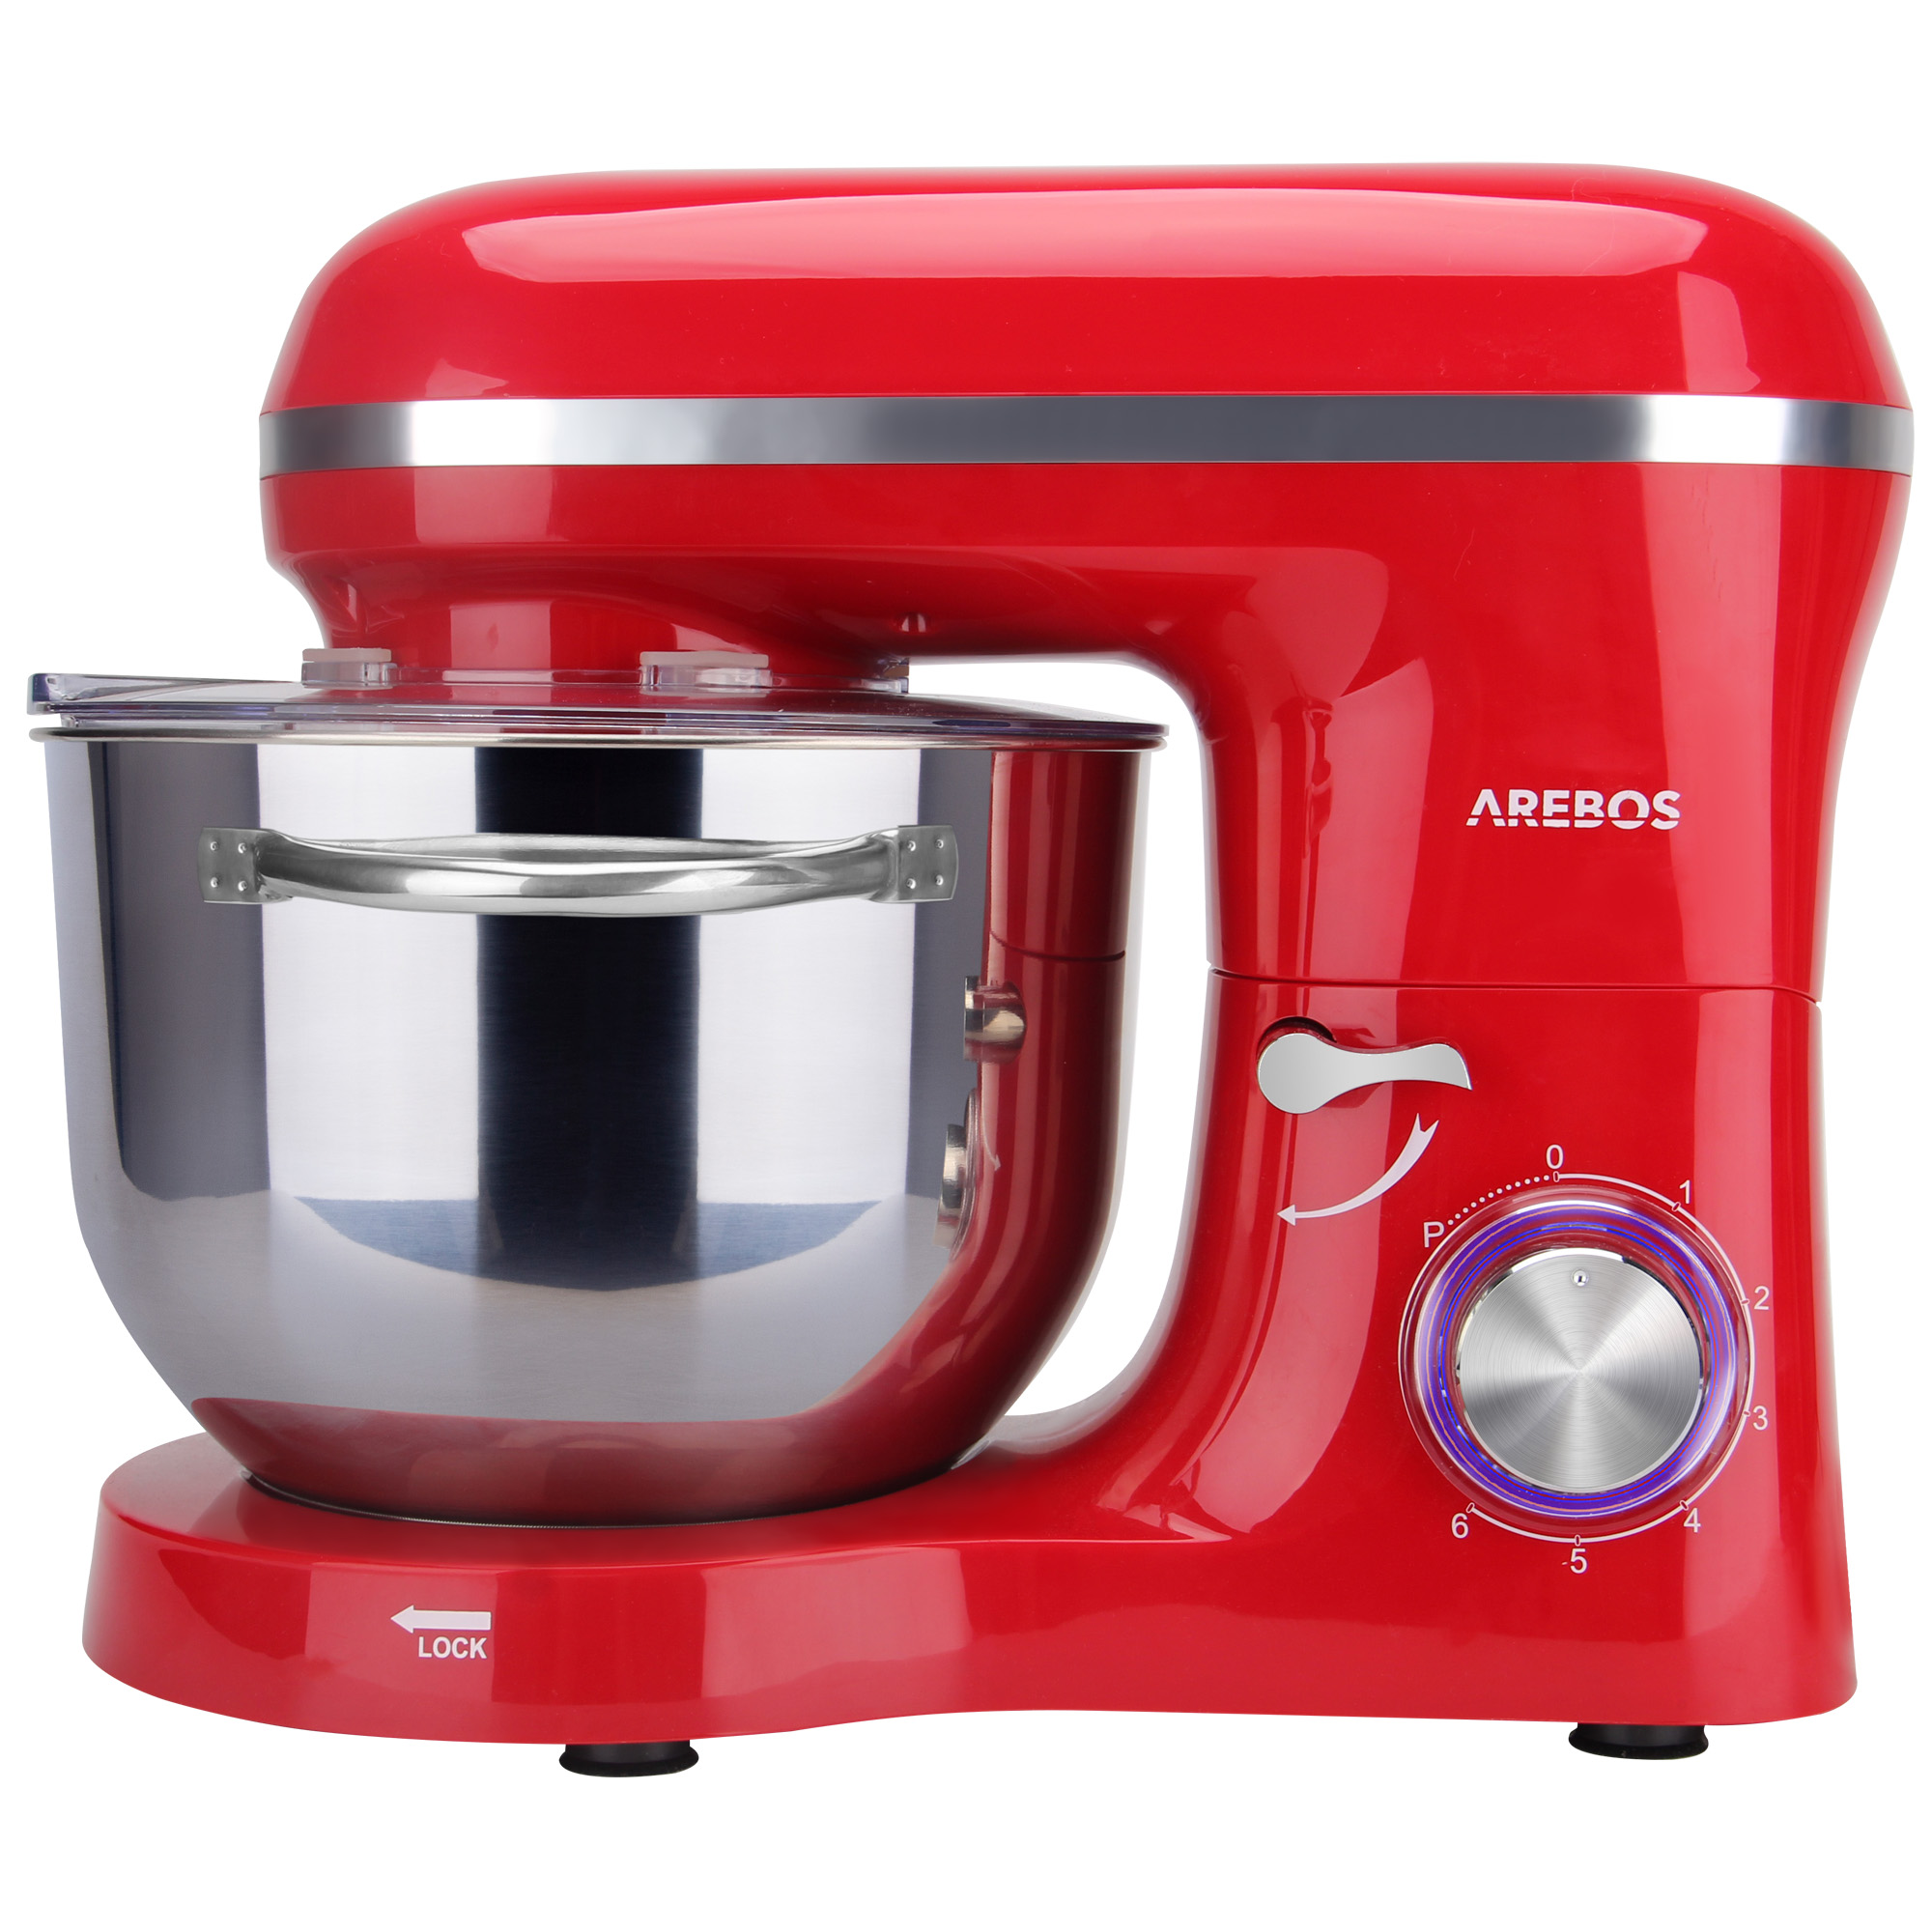 Liter, Watt) Speedlevels Rot Küchenmaschine AREBOS 1500 (Rührschüsselkapazität: 6 6